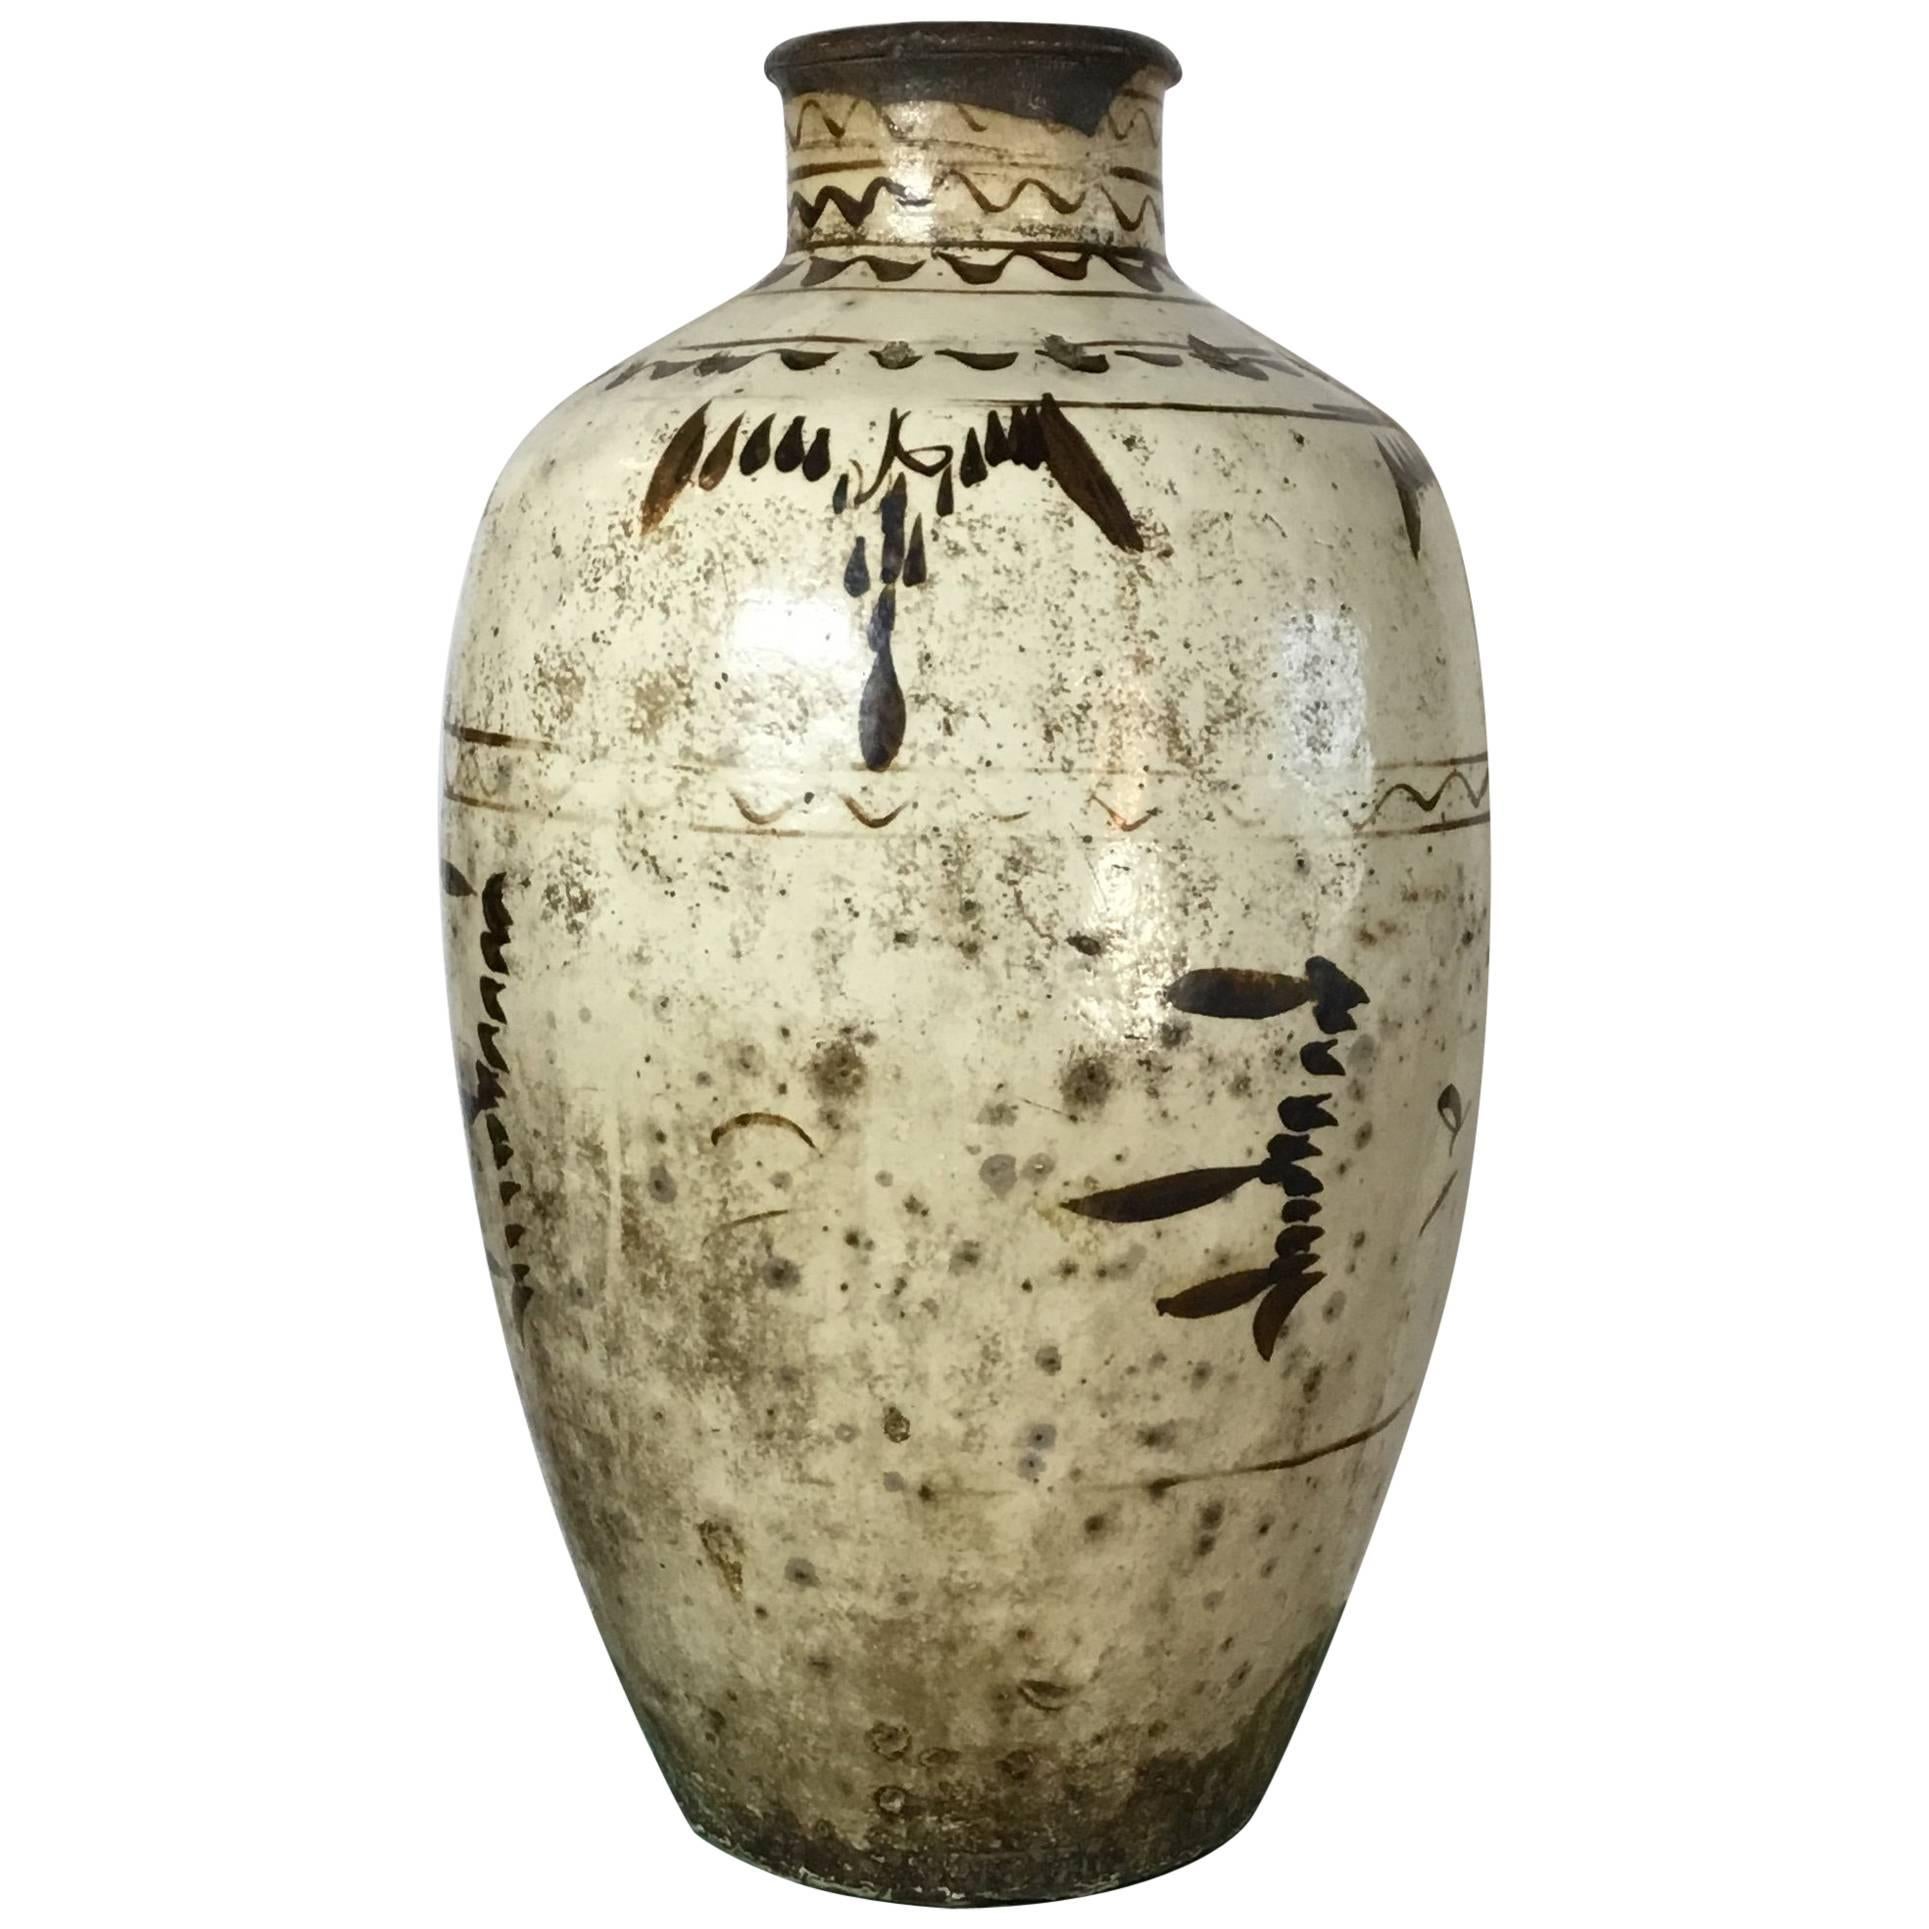 Antique Cizhou Stoneware Jar, Ming Dynasty